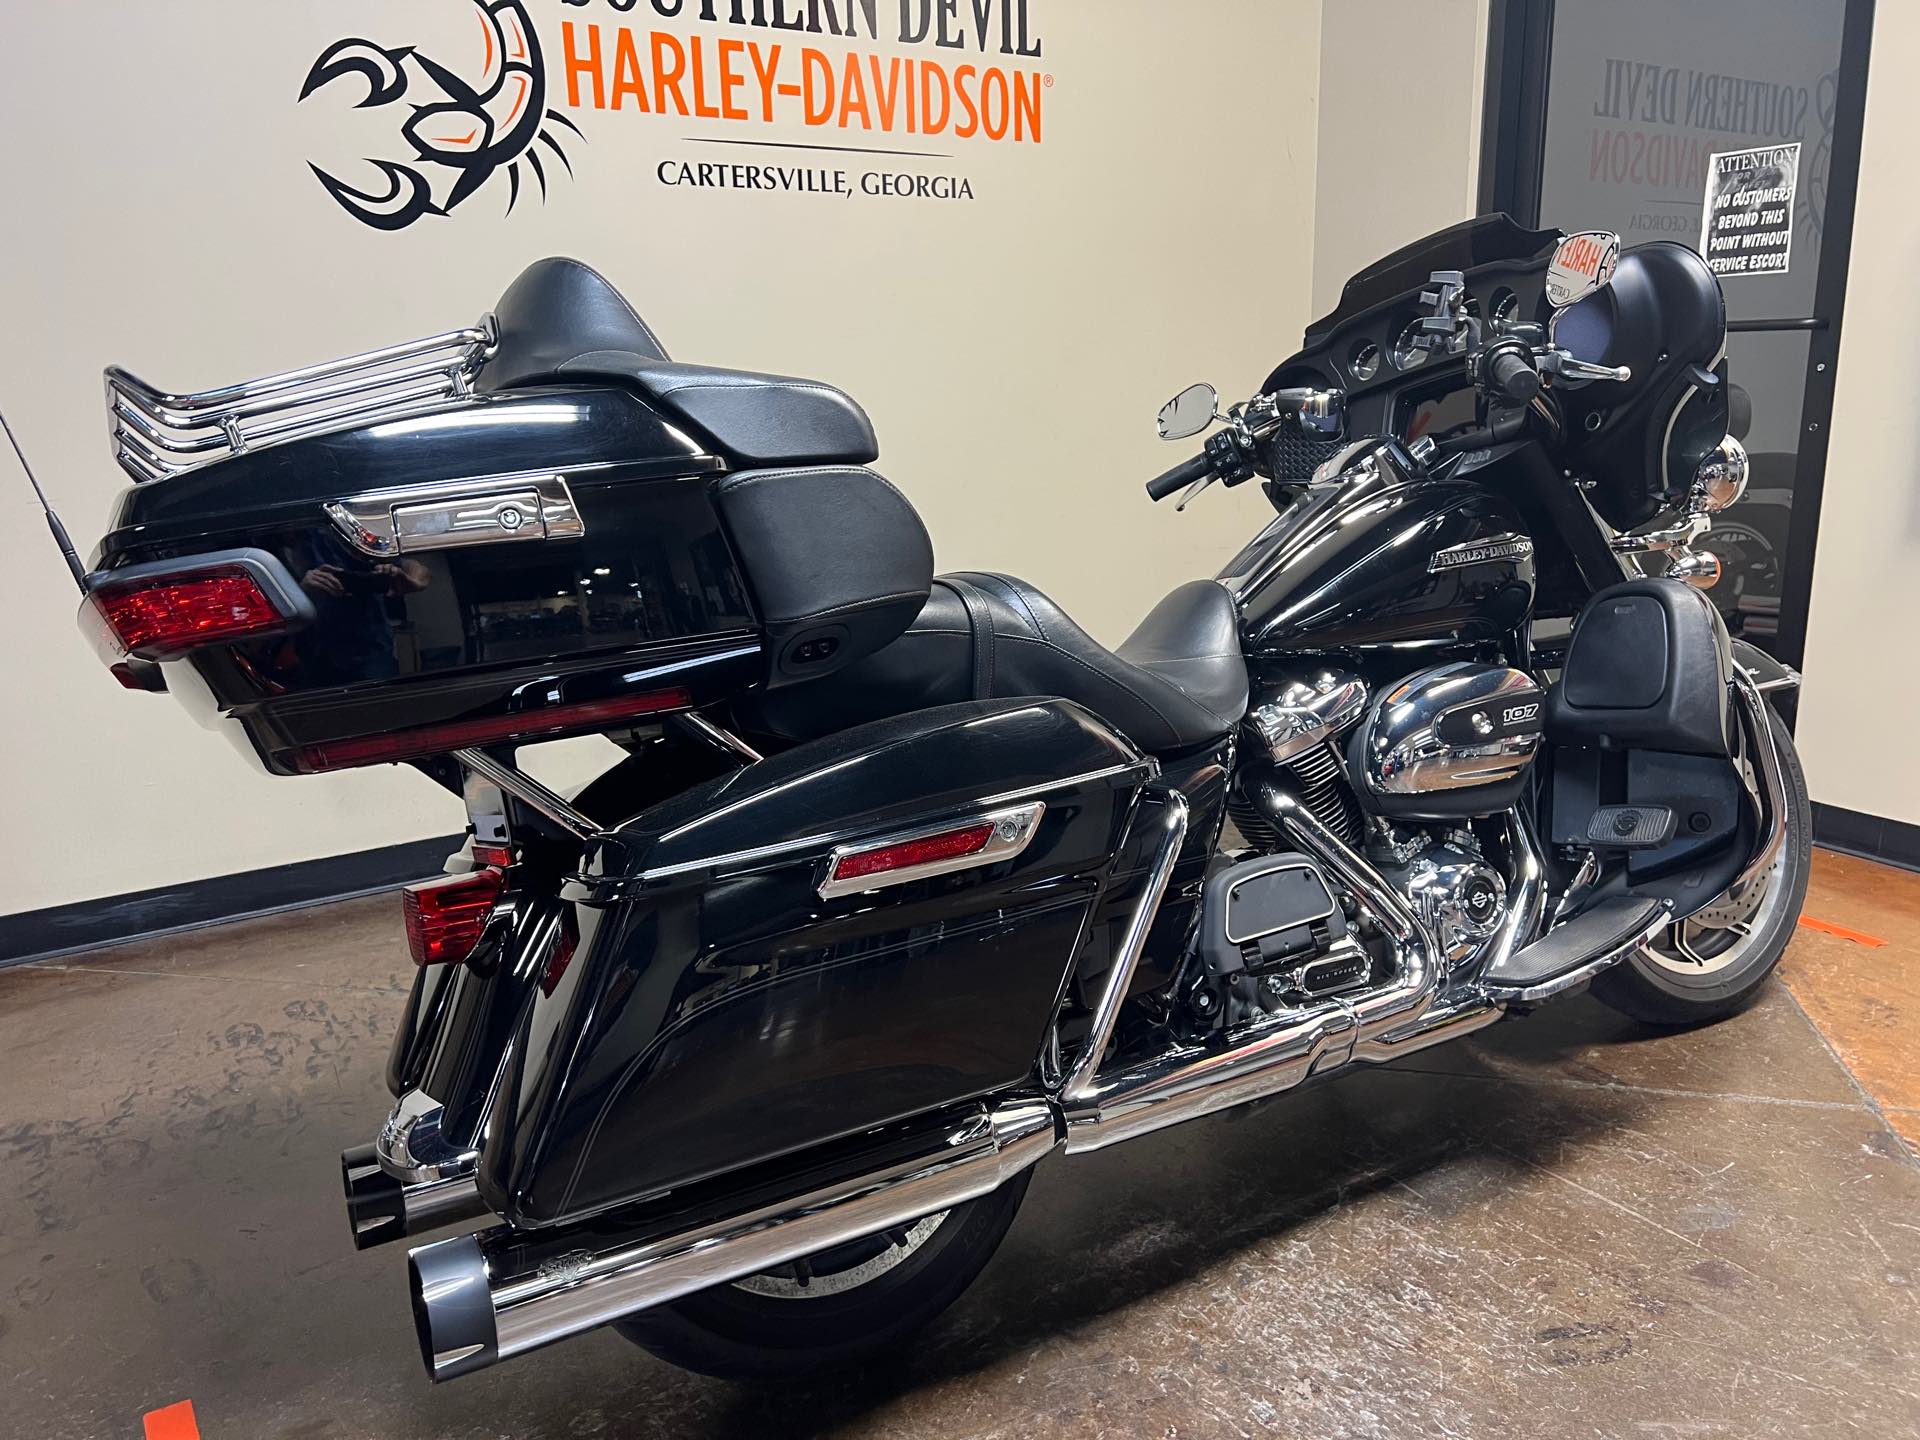 2019 Harley-Davidson FLHTCU at Southern Devil Harley-Davidson